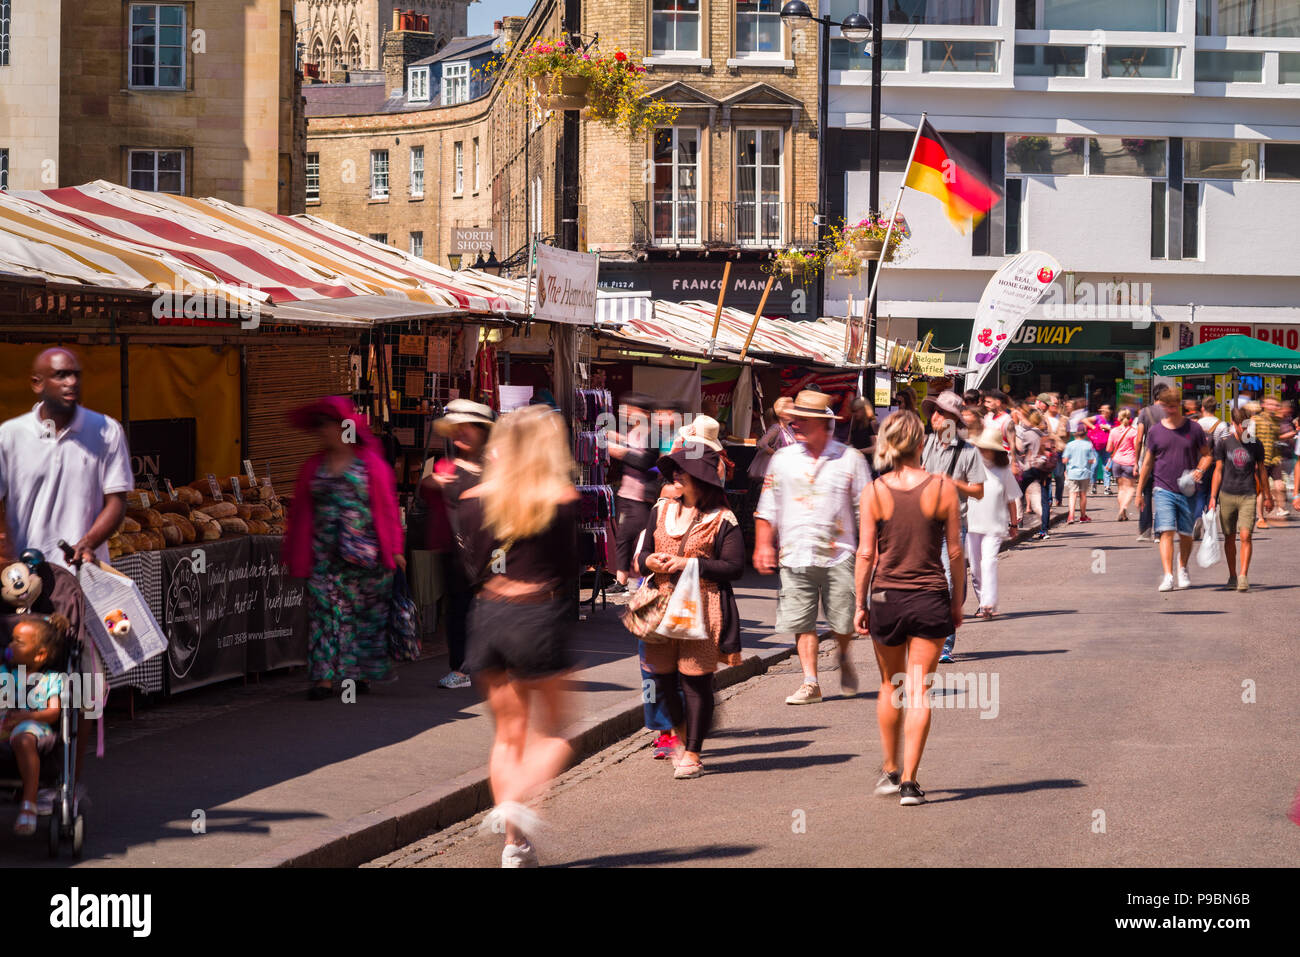 People browsing and walking past outdoor market stalls in Market street, Cambridge, UK Stock Photo